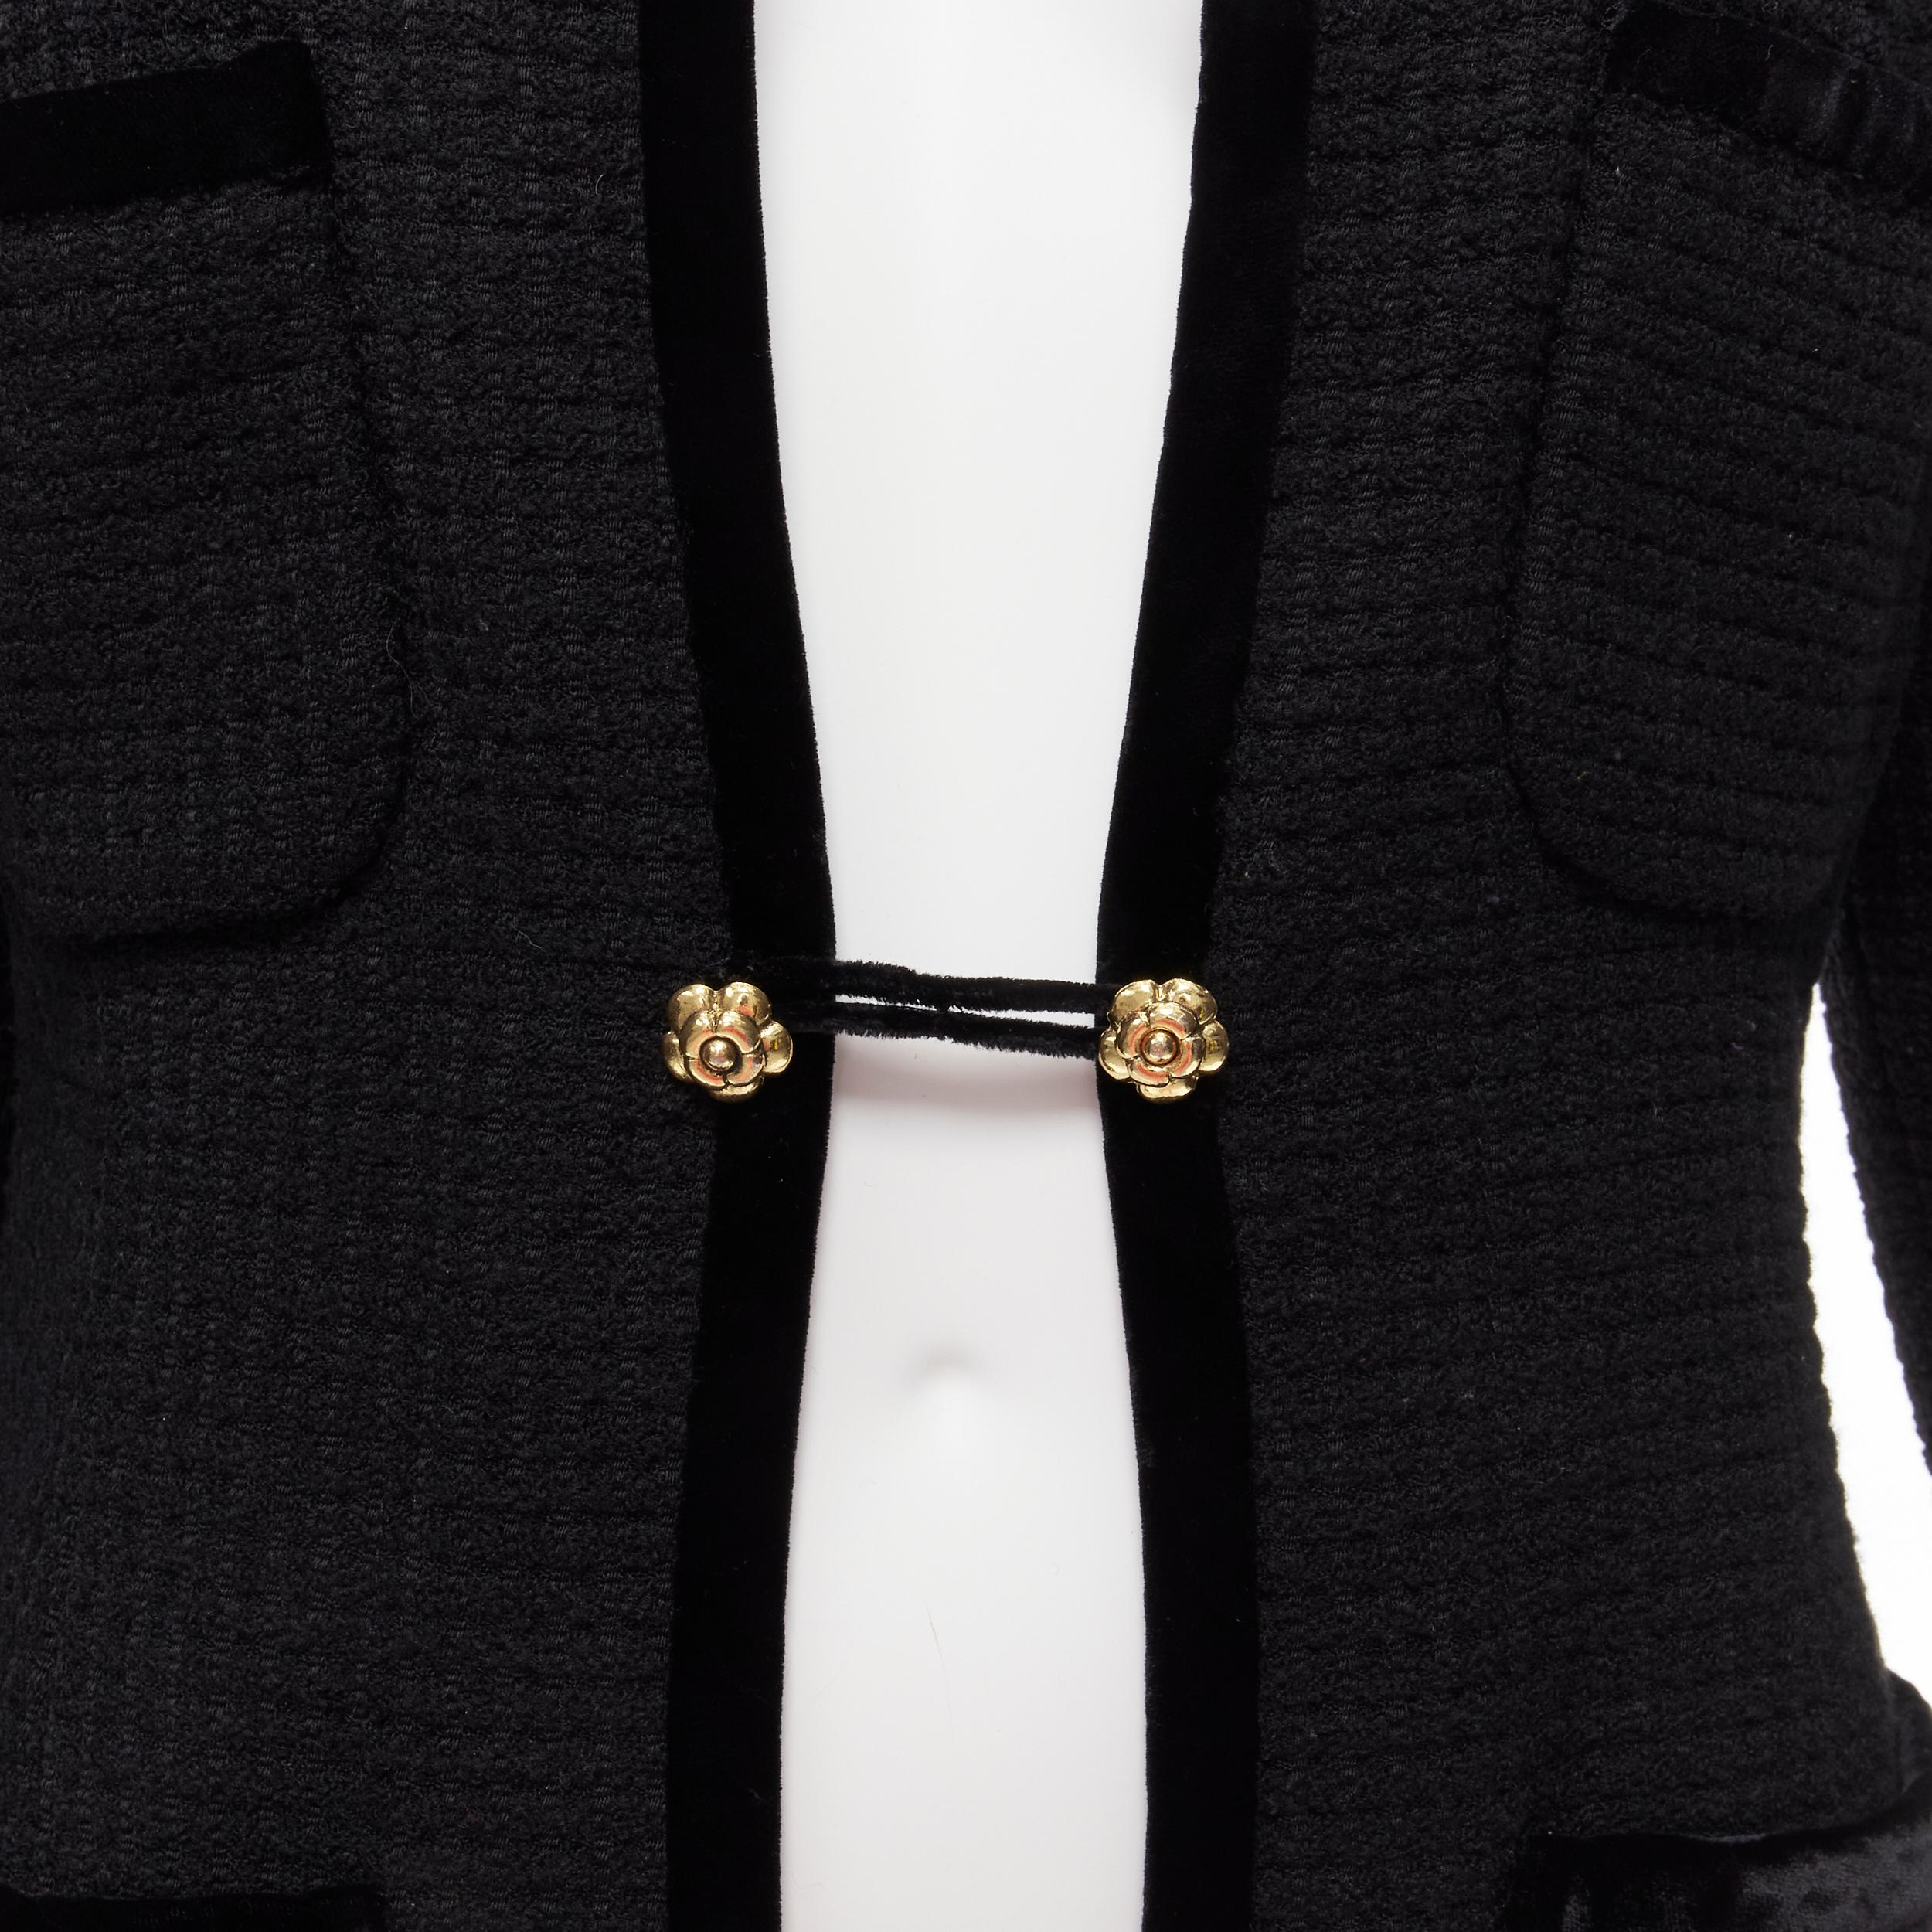 CHANEL Collection 23 1989 Vintage camellia button velvet trim black tweed jacket FR40 L
Reference: TGAS/D00154
Brand: Chanel
Designer: Karl Lagerfeld
Collection: Fall 1989 Collection 23
Material: Wool, Velvet
Color: Black
Pattern: Solid
Closure: